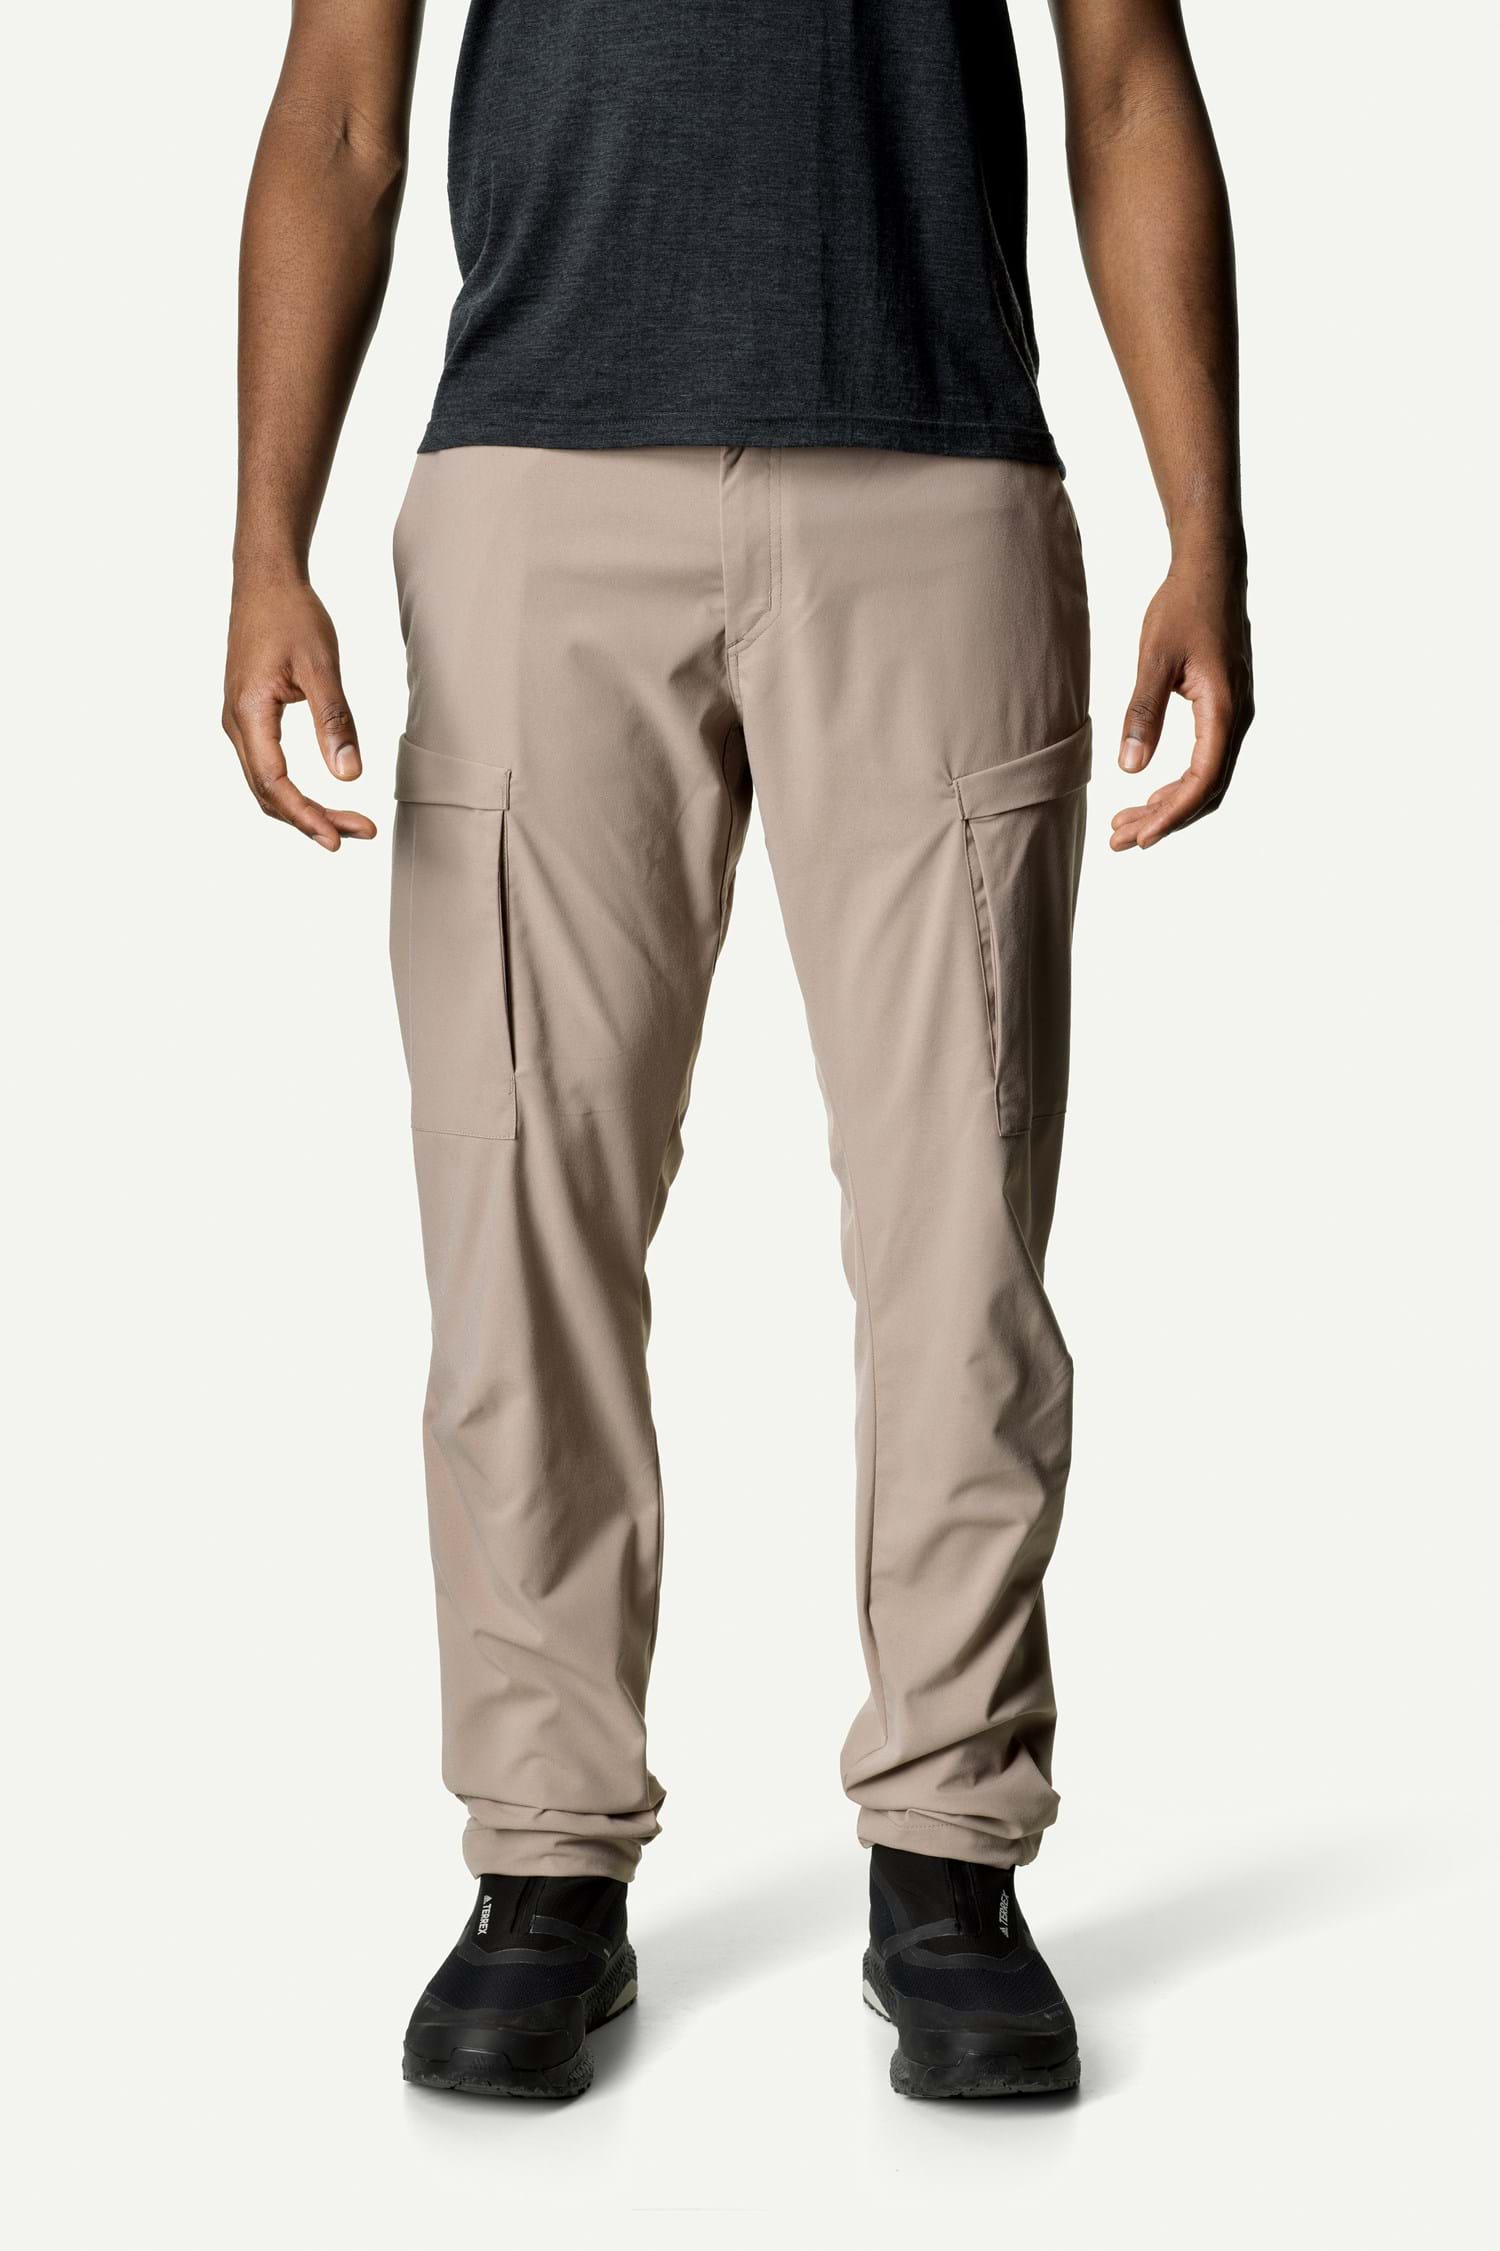 Shop Comfortable Men's Pants | Houdini Sportswear